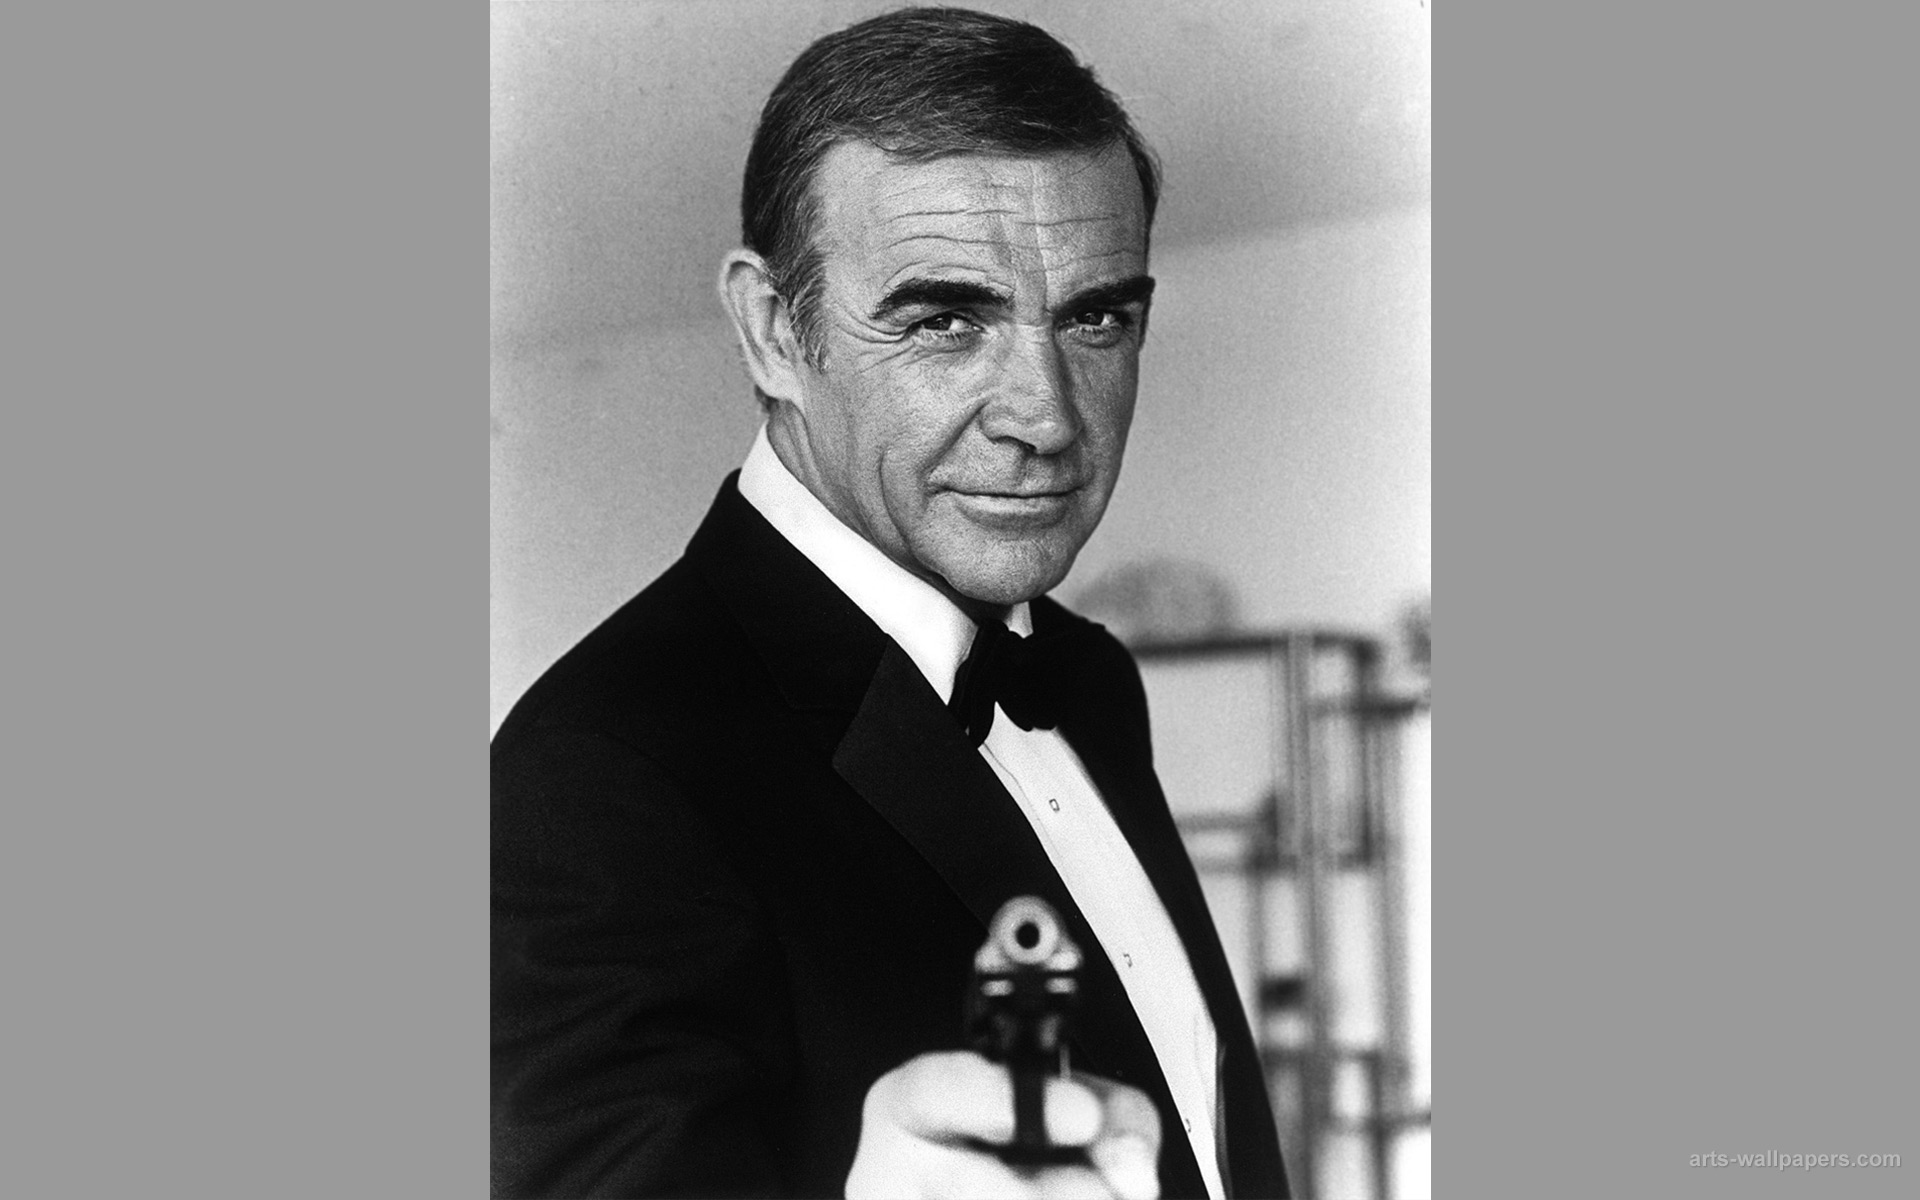 James Bond Movie Posters Wallpaper